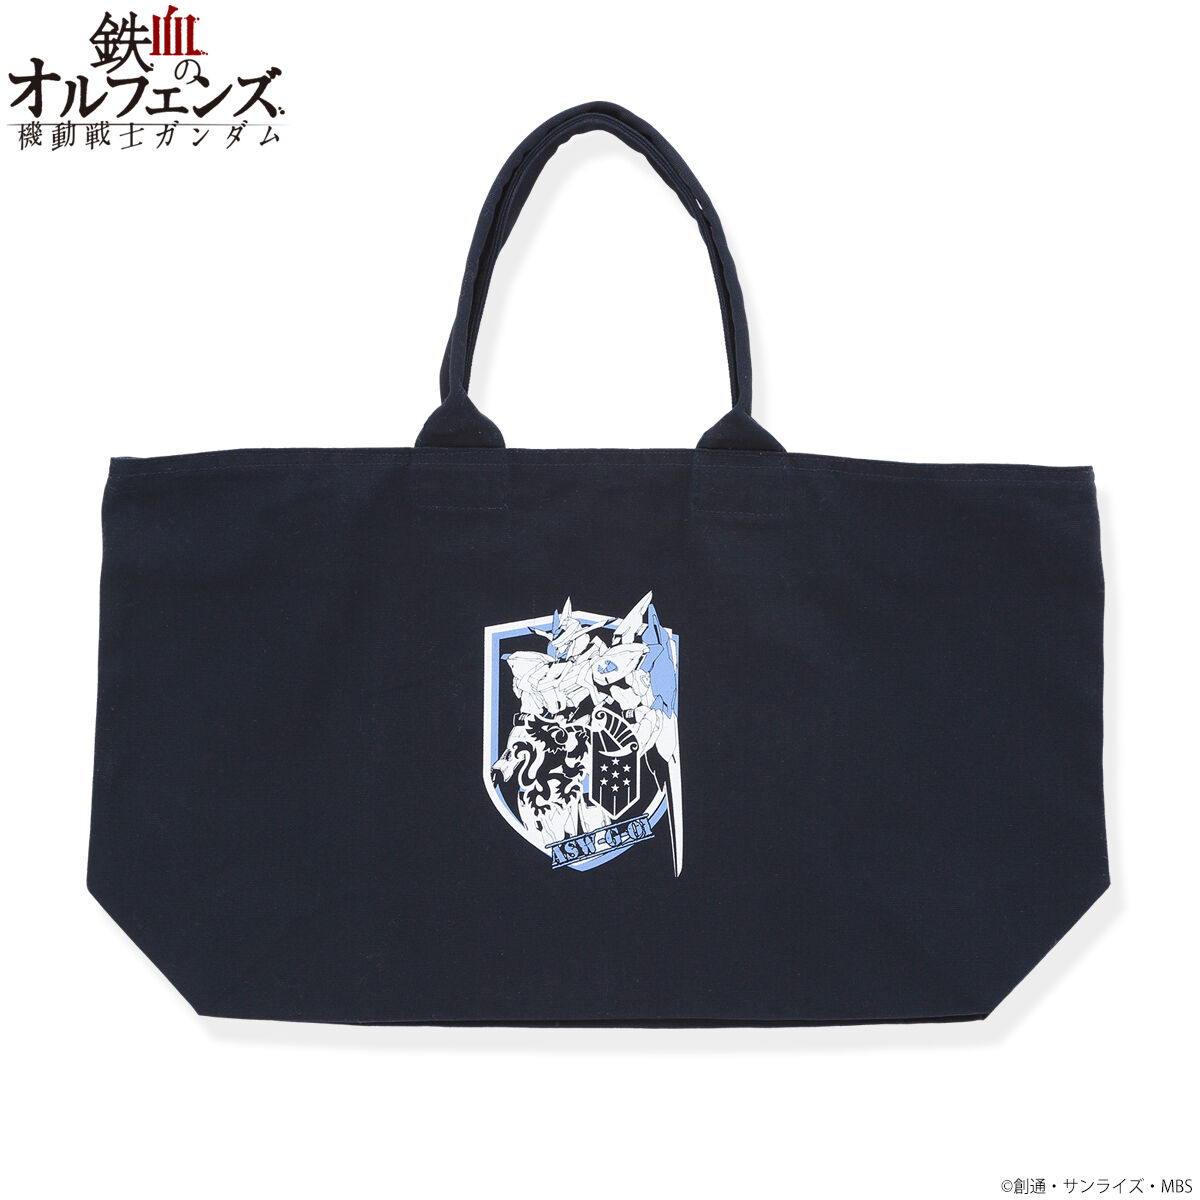 Mobile Suit Gundam: Iron-Blooded Orphans Emblem+Mobile Suit Tote Bag